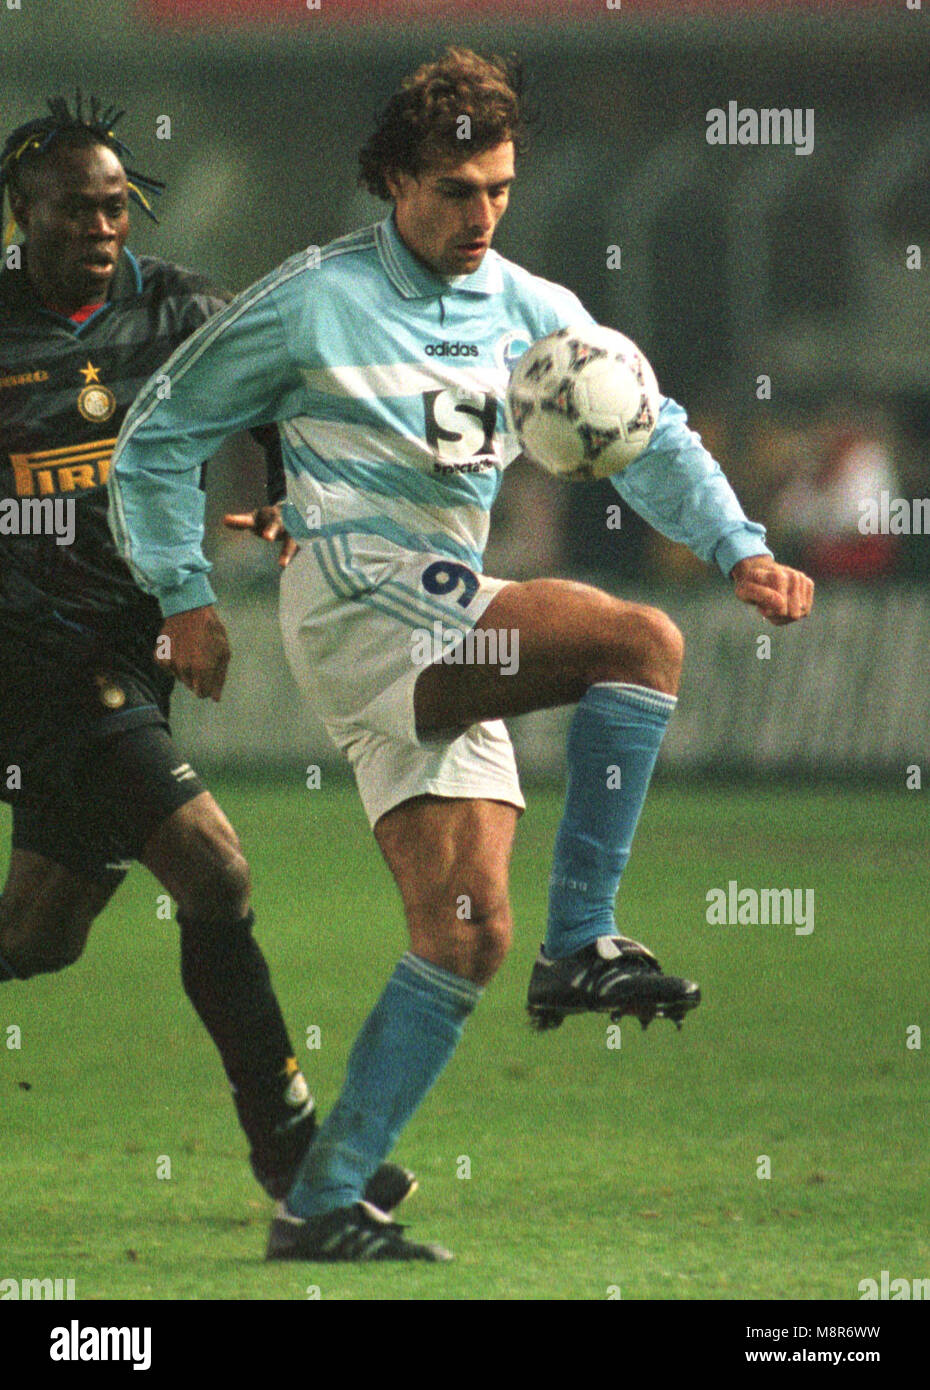 File:RCS-OL Ligue 1 - Mur Bleu - Meinau.jpg - Wikimedia Commons